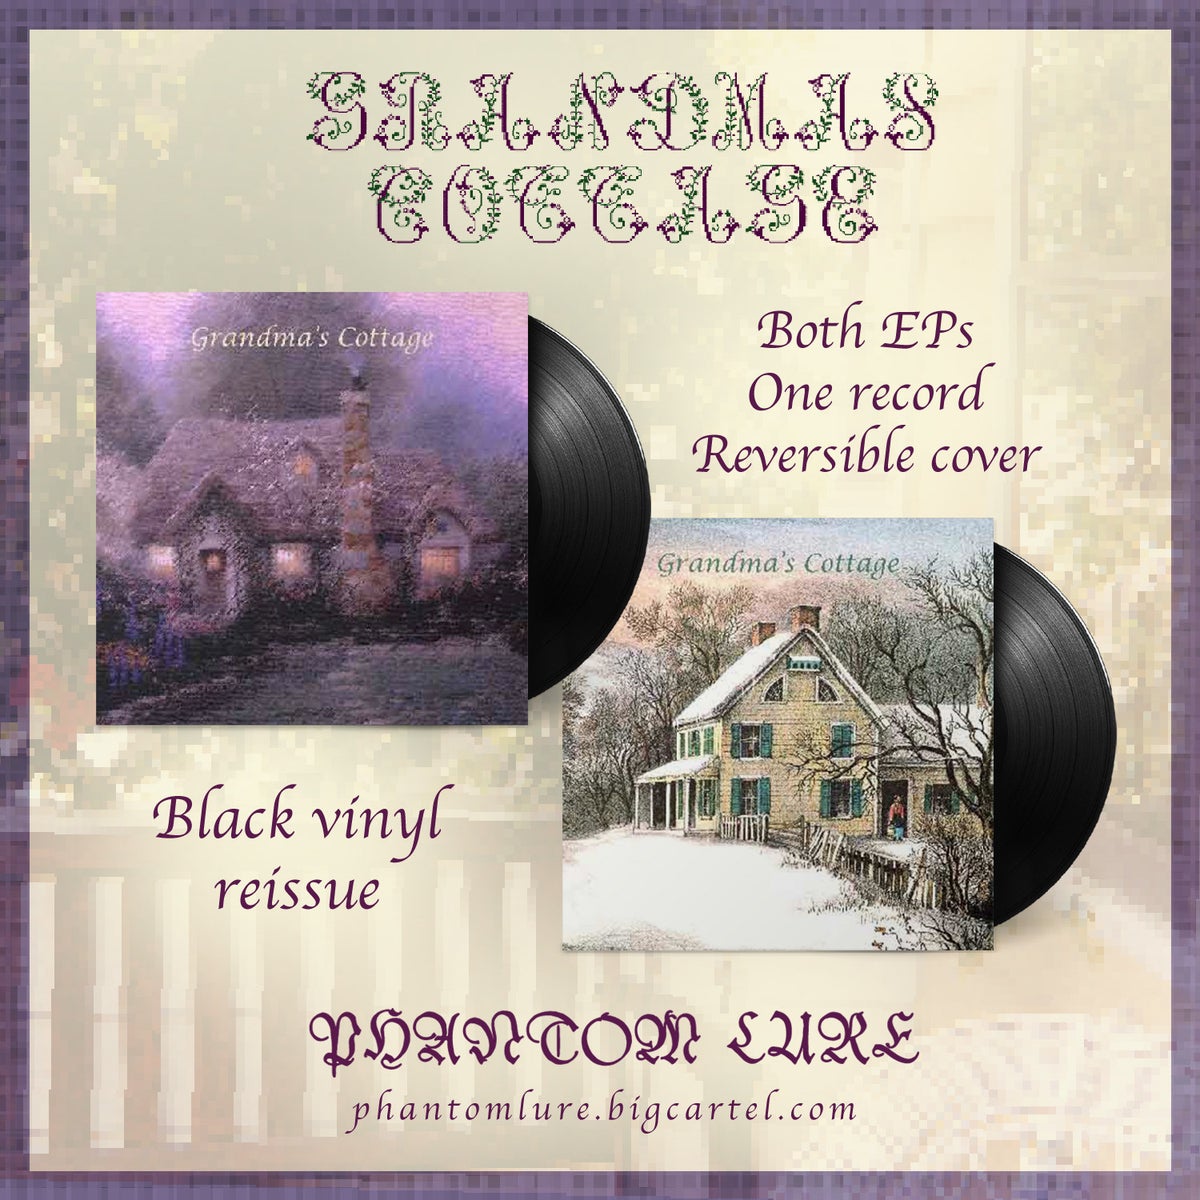 [SOLD OUT] GRANDMA'S COTTAGE "Grandma's Cottage" Vinyl LP